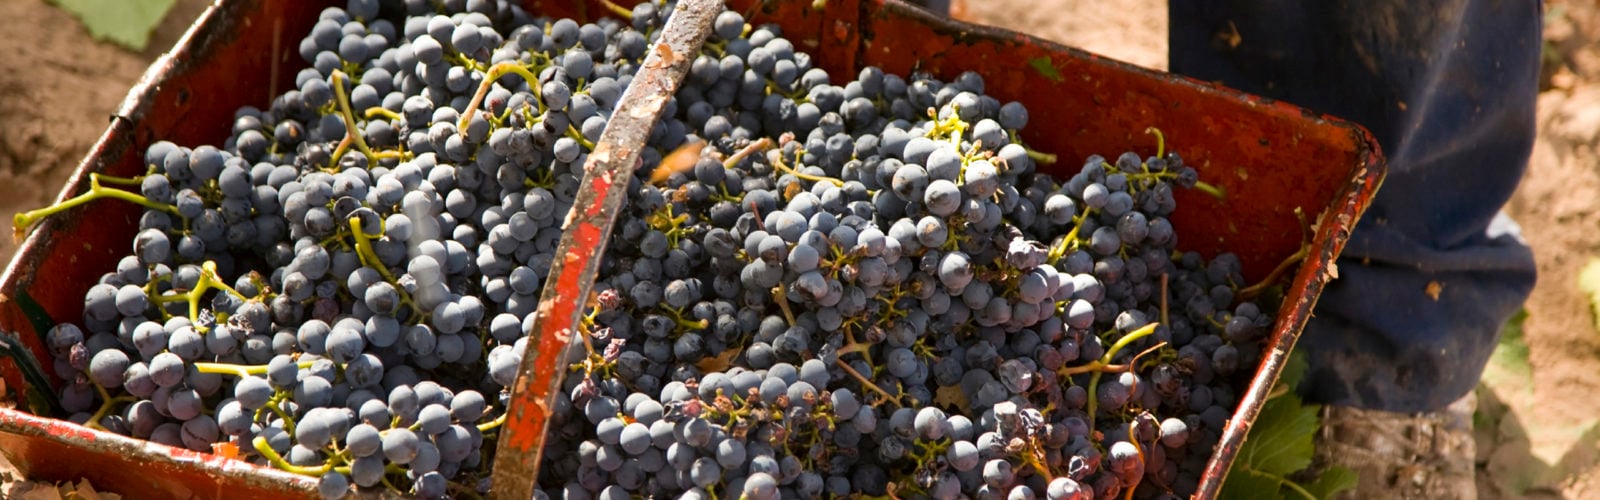 Basket of grapes in Mendoza, Argentina